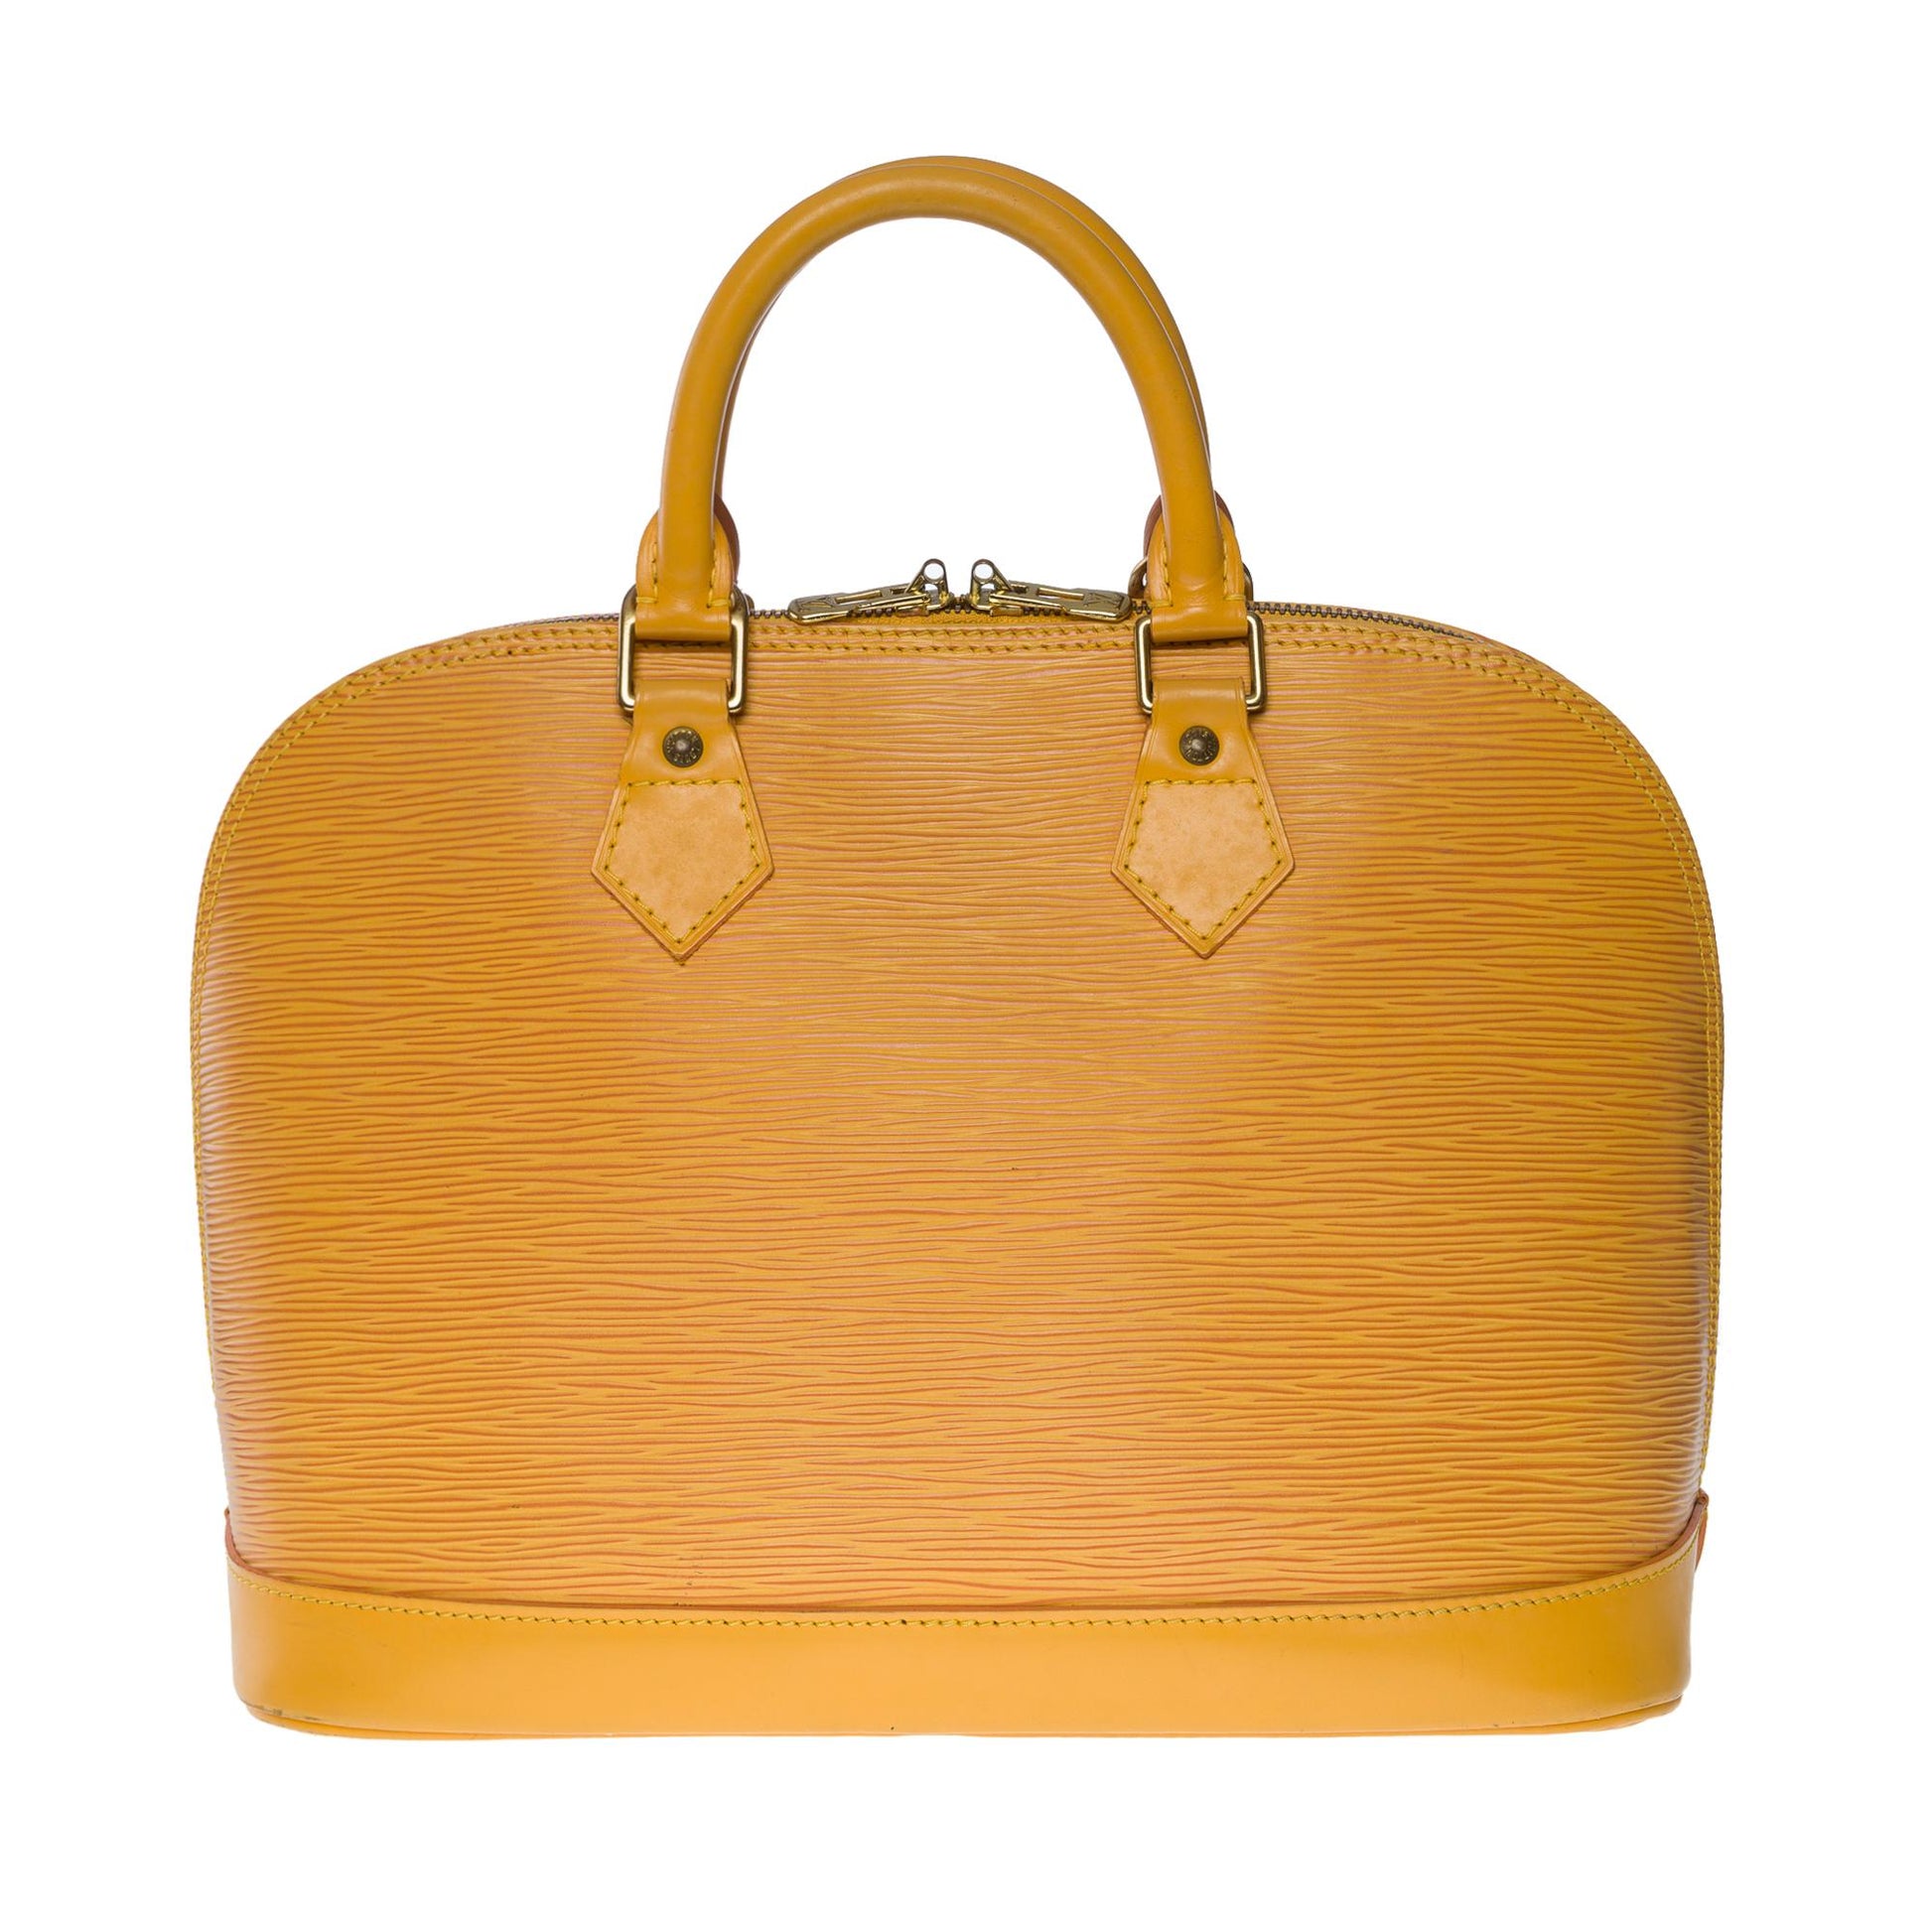 Louis Vuitton Alma Handbag in Yellow Epi Leather with Gold Hardware